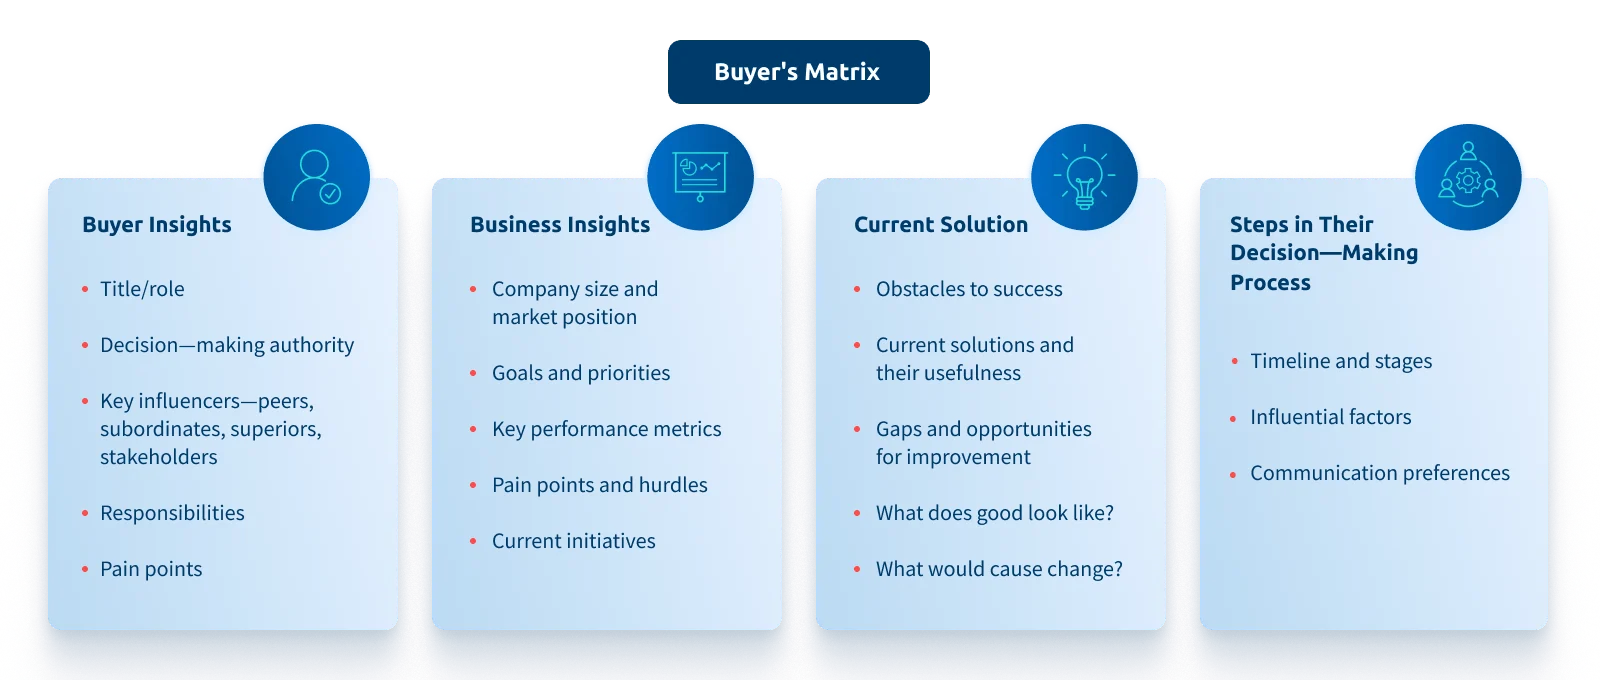 Buyers Matrix Infographic